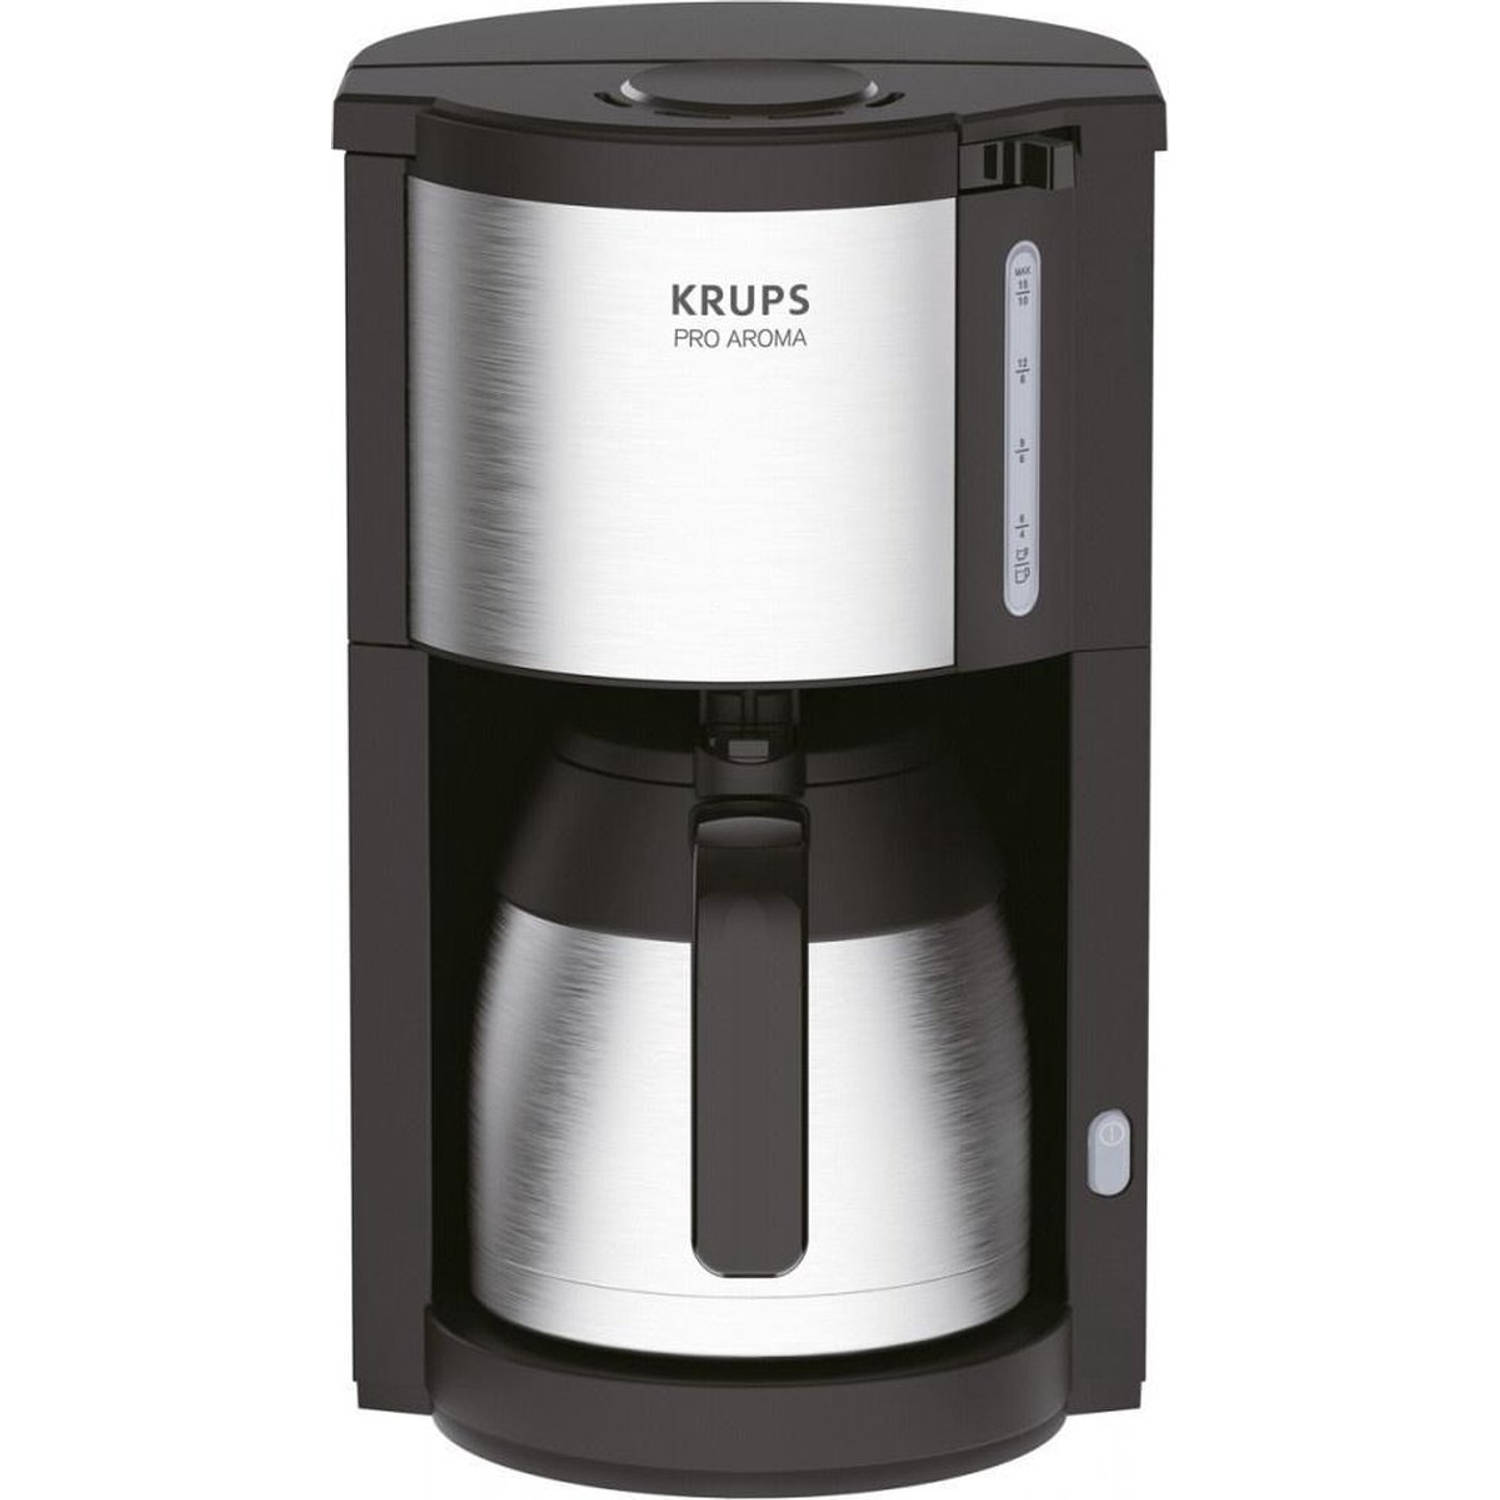 KRUPS filter-koffiezetapparaat KM305D Pro Aroma, 1,25 l koffiekan